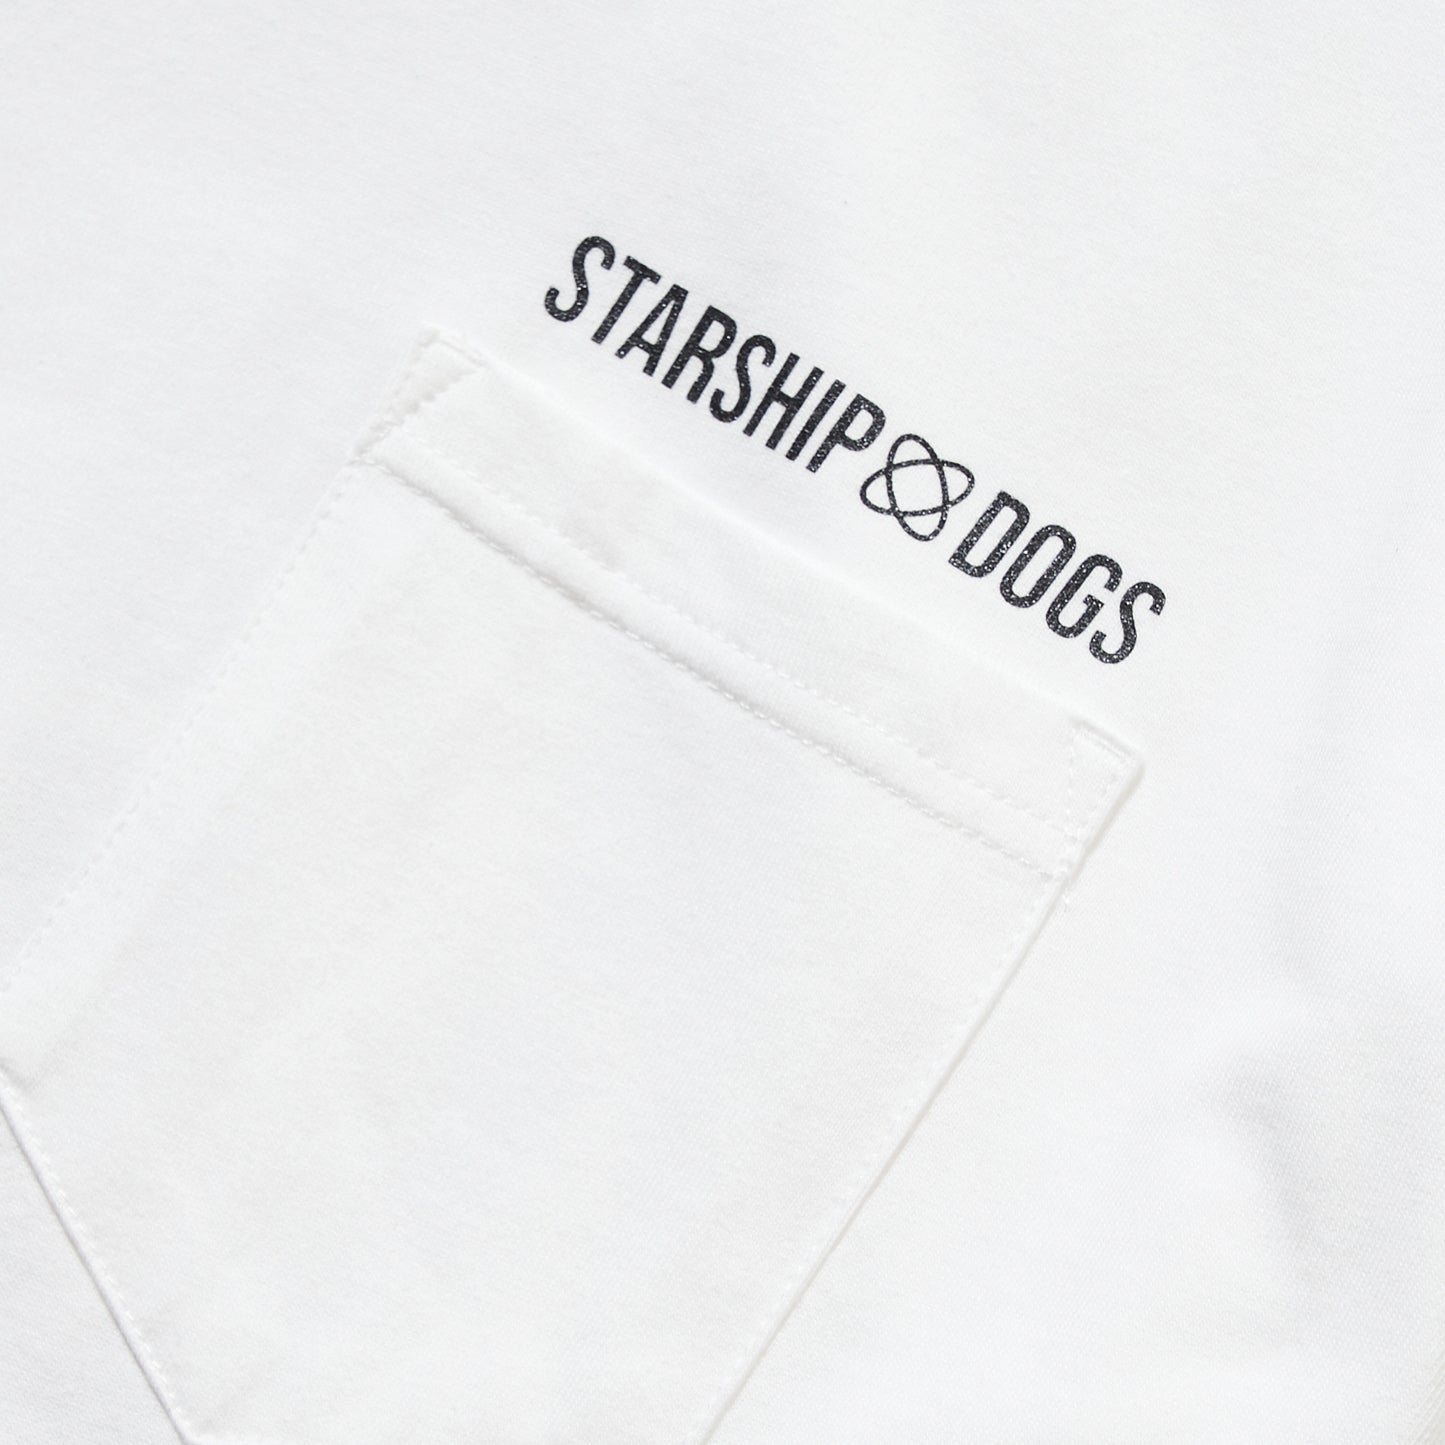 STARSHIP DOGS "星舰热狗" Tshirt